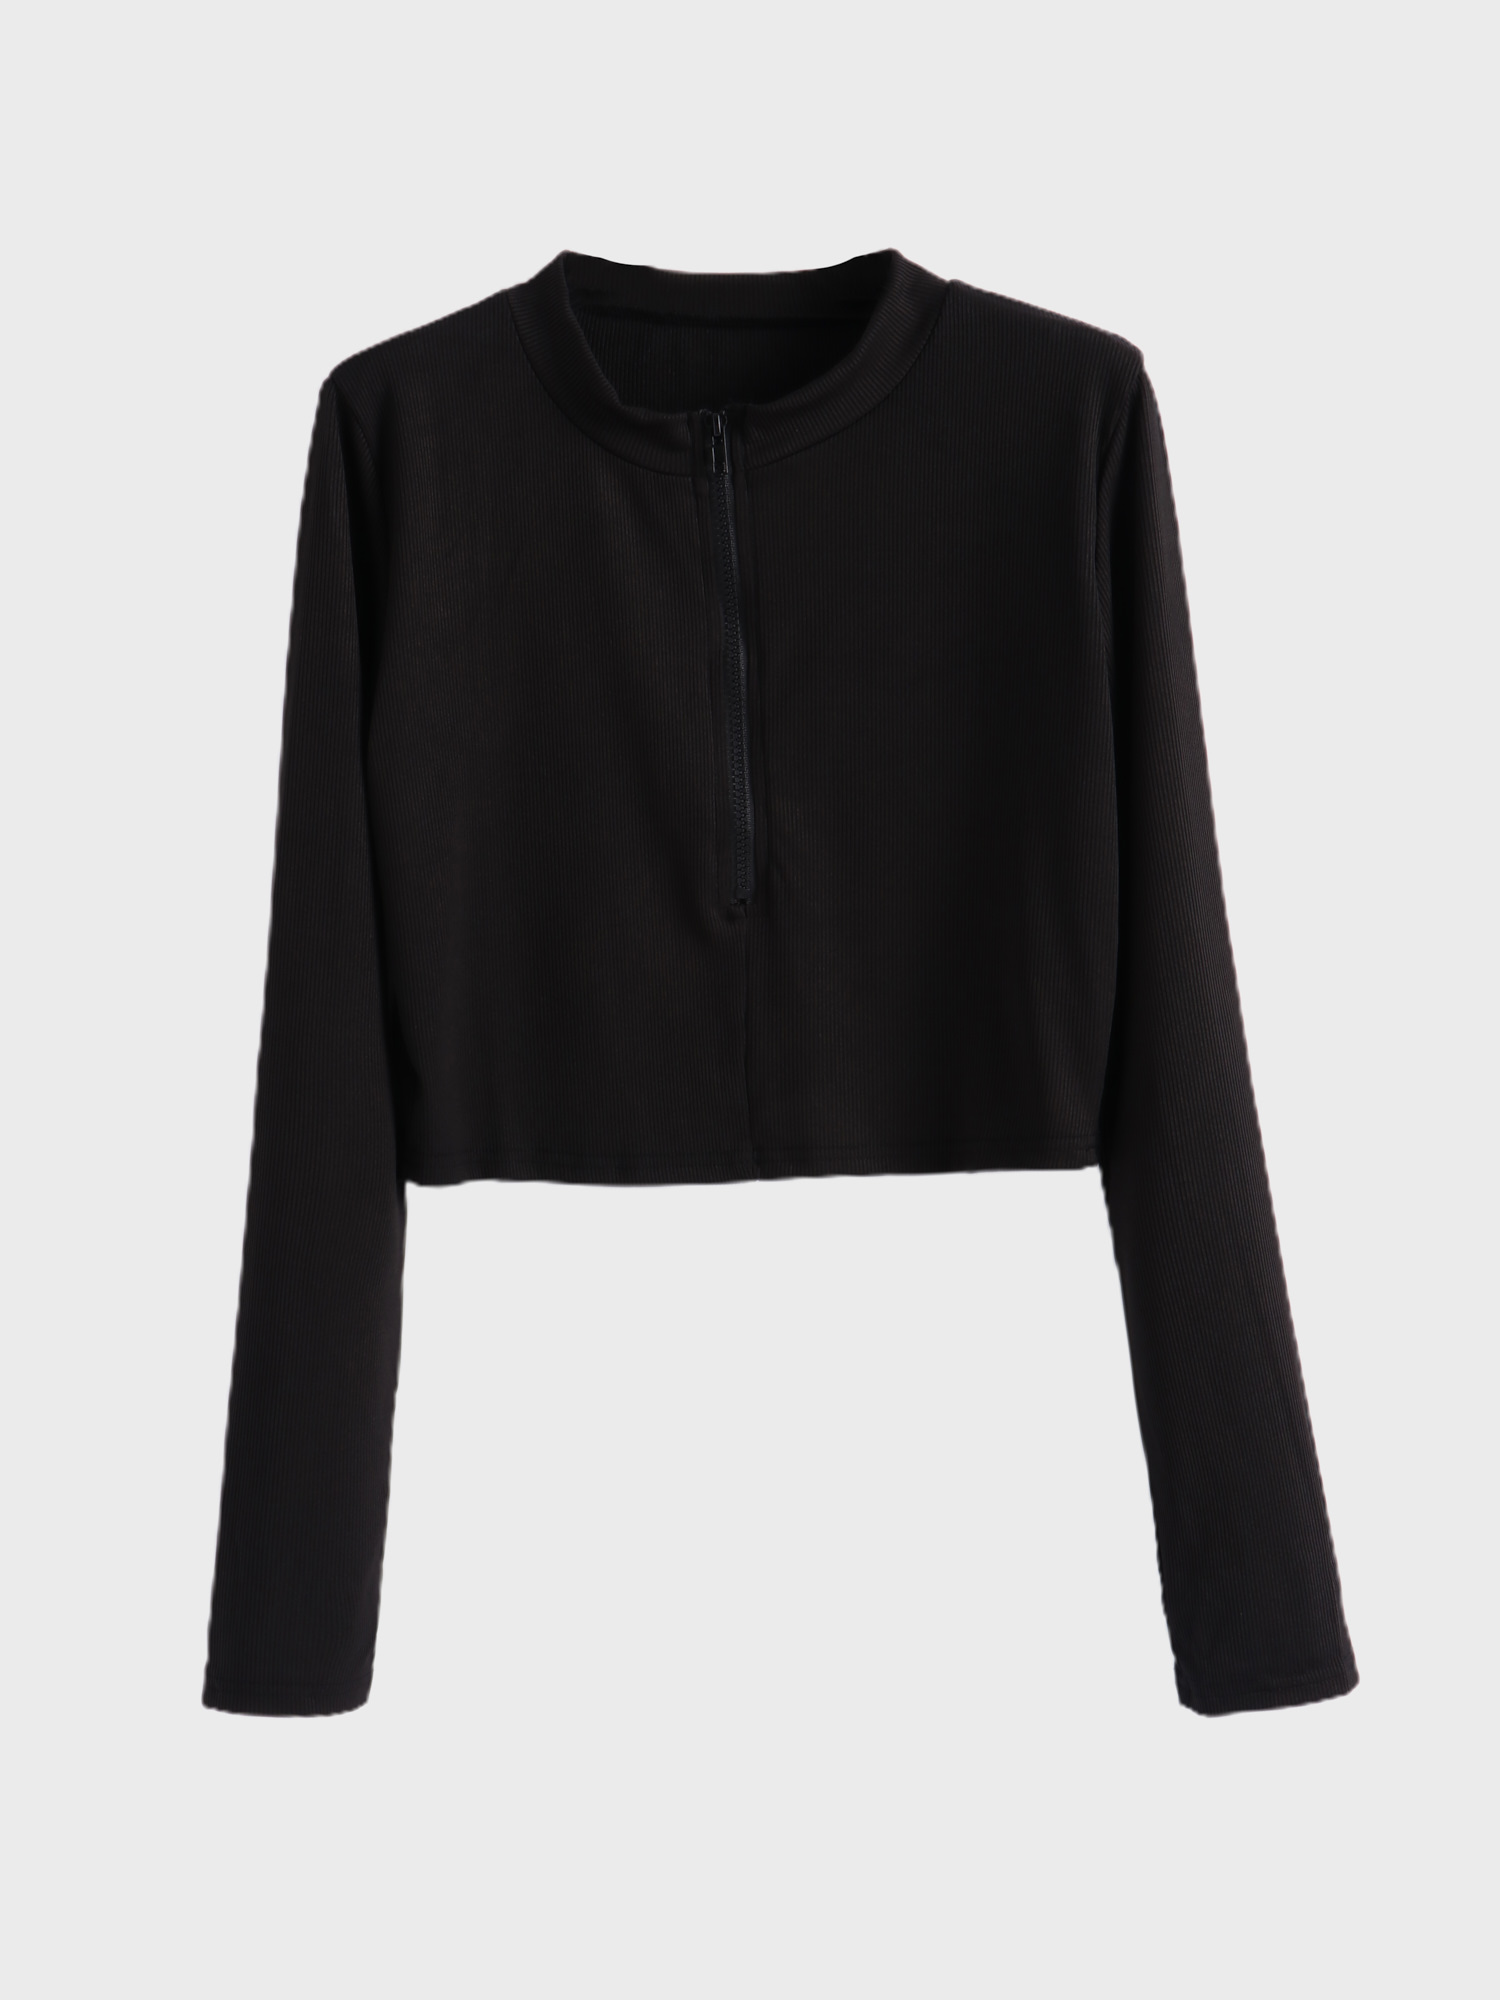 Black Midsize 1/2 Zipper Stand Collar Cool Crop Top | HEMWAVE - Midsize Fashion